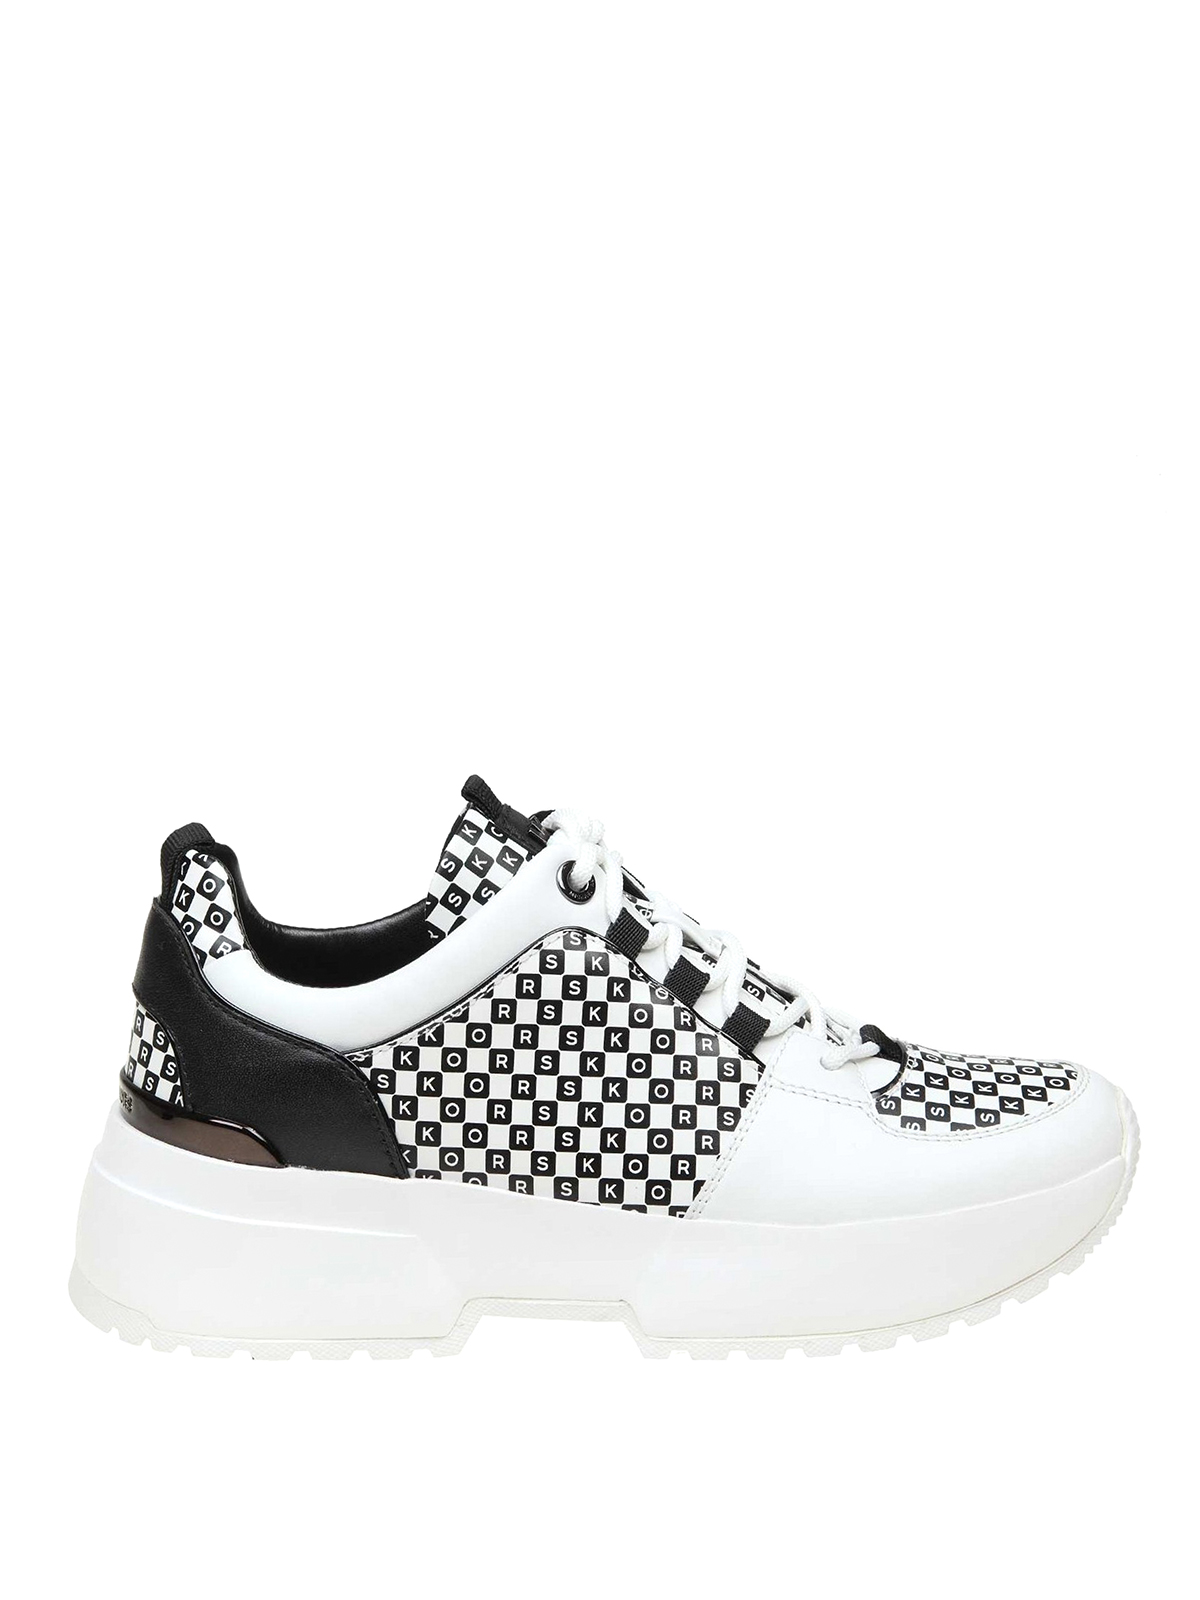 MICHAEL Michael Kors Cosmo Knit Slip-On Sneakers | Footwear design women,  Sneakers, Leather shoes woman